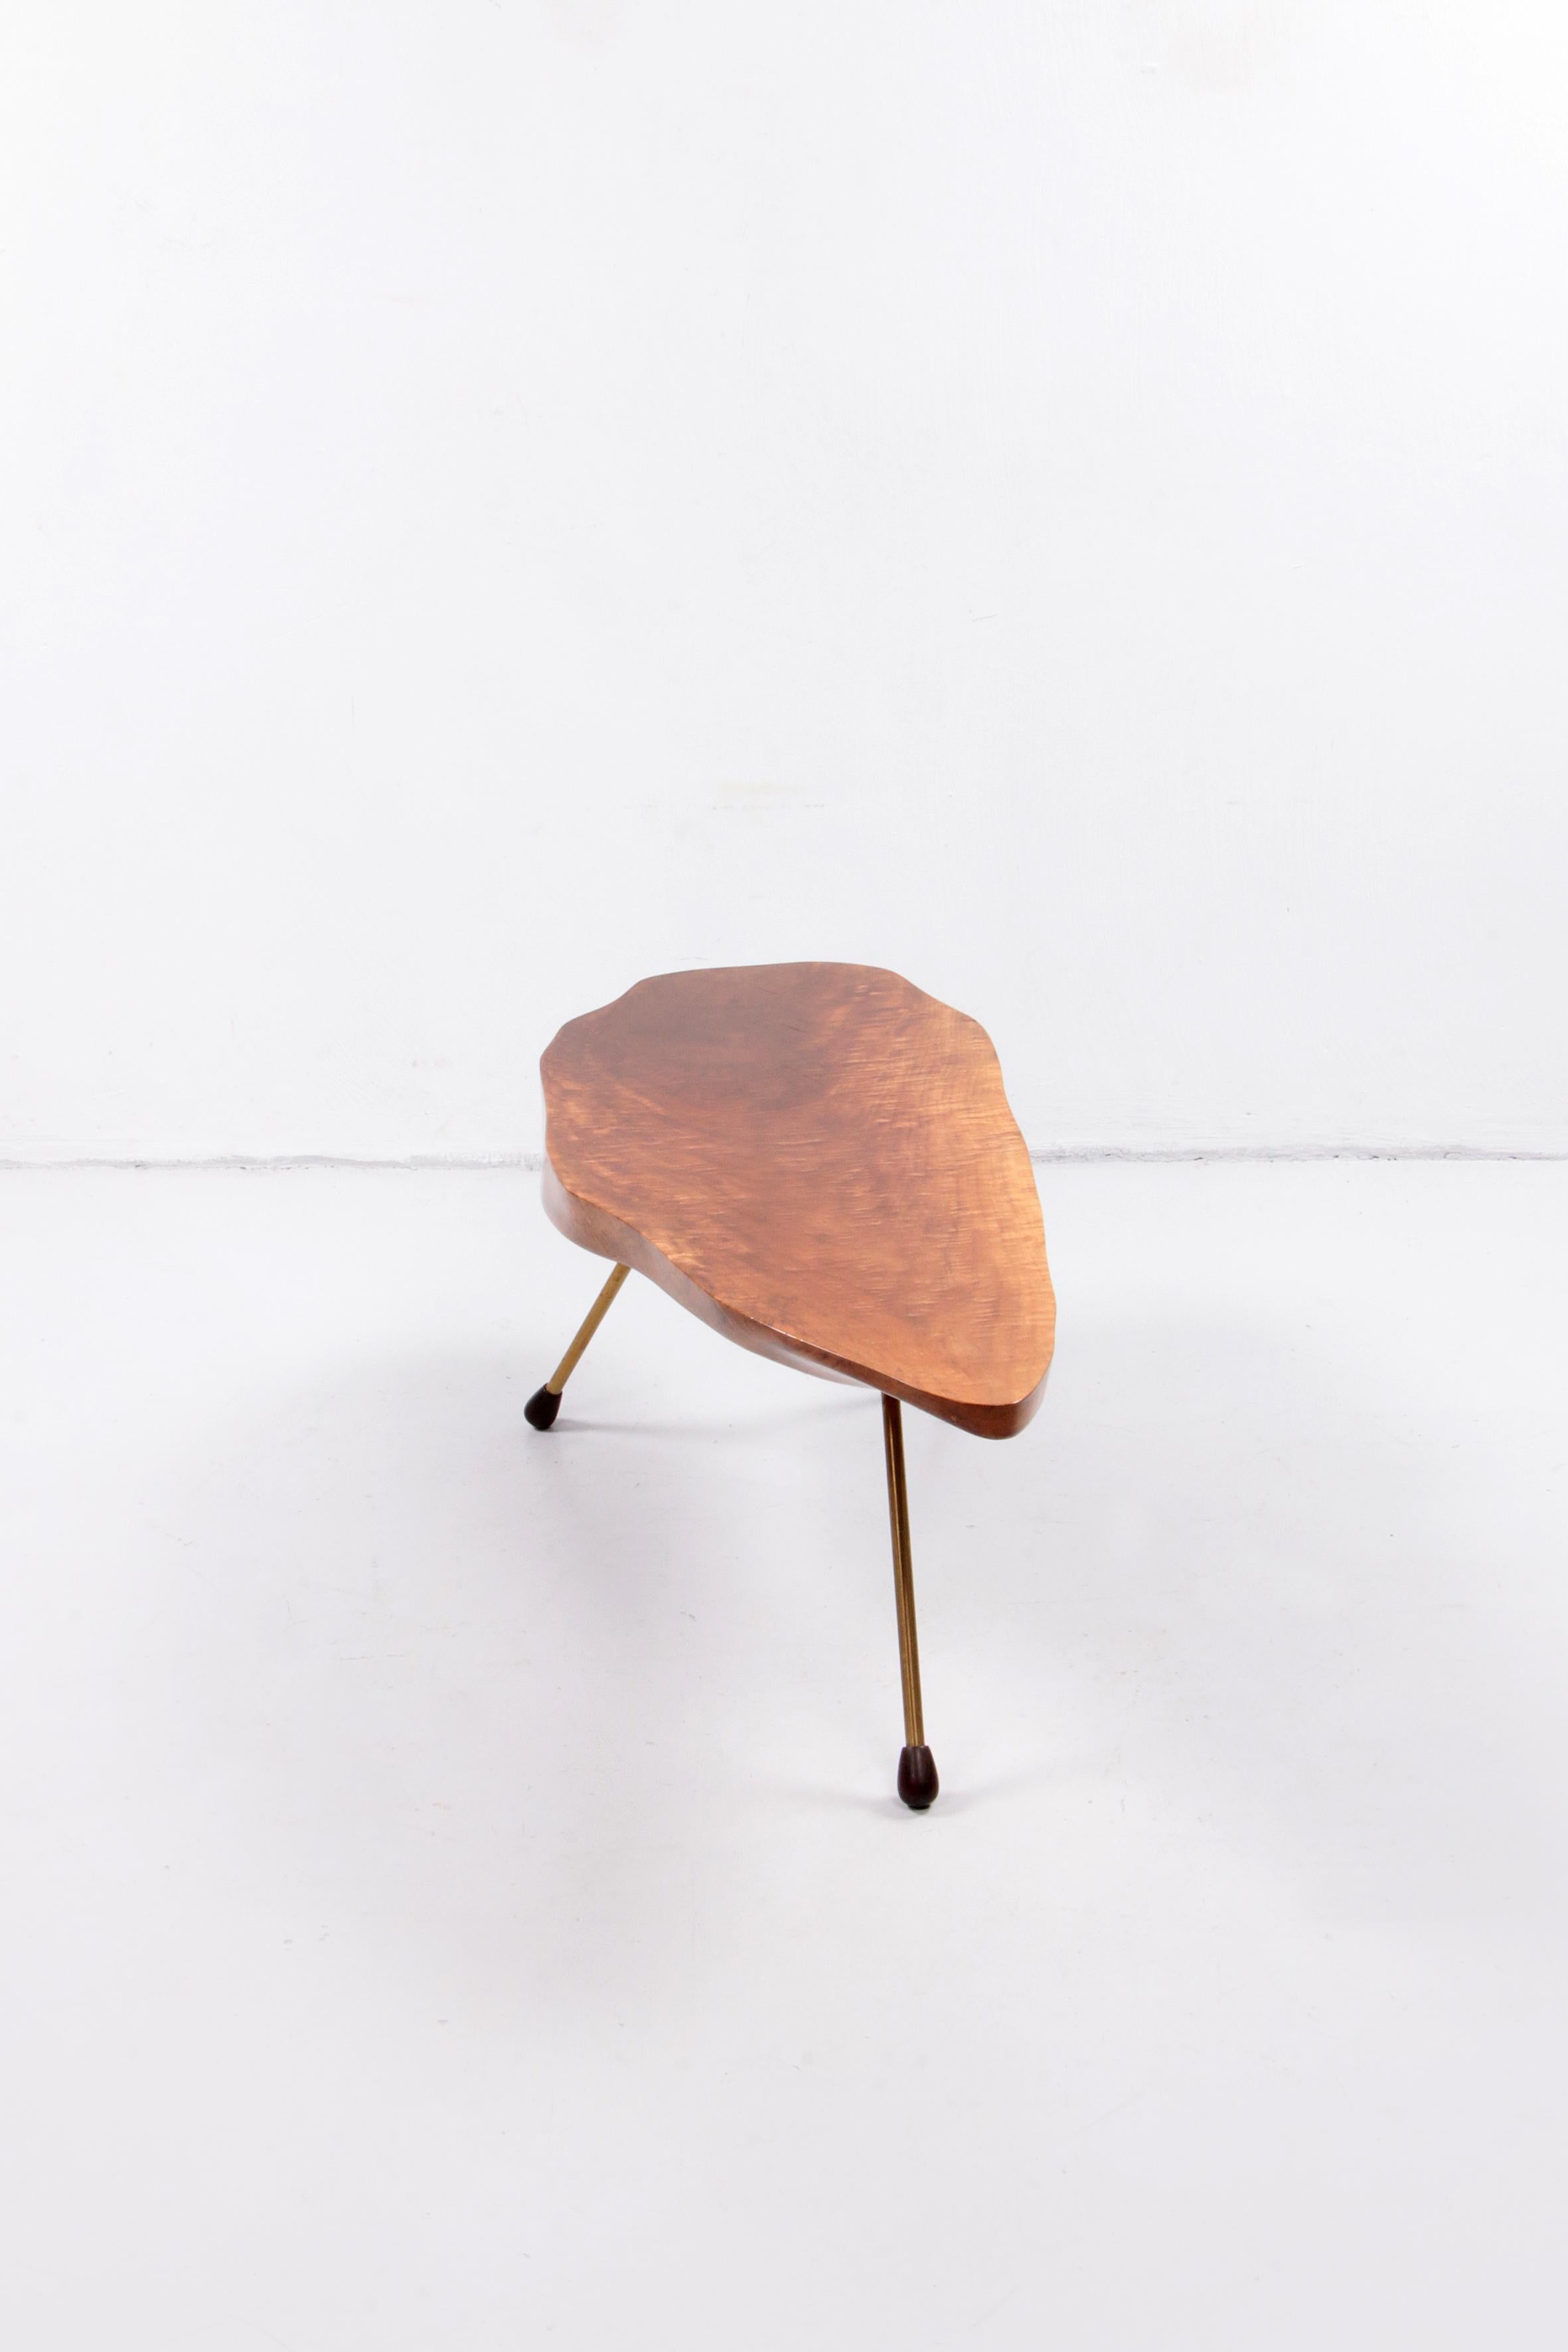 Carl Aubock Design Coffee Table Walnut with Copper Legs, 1950s Austria For Sale 9